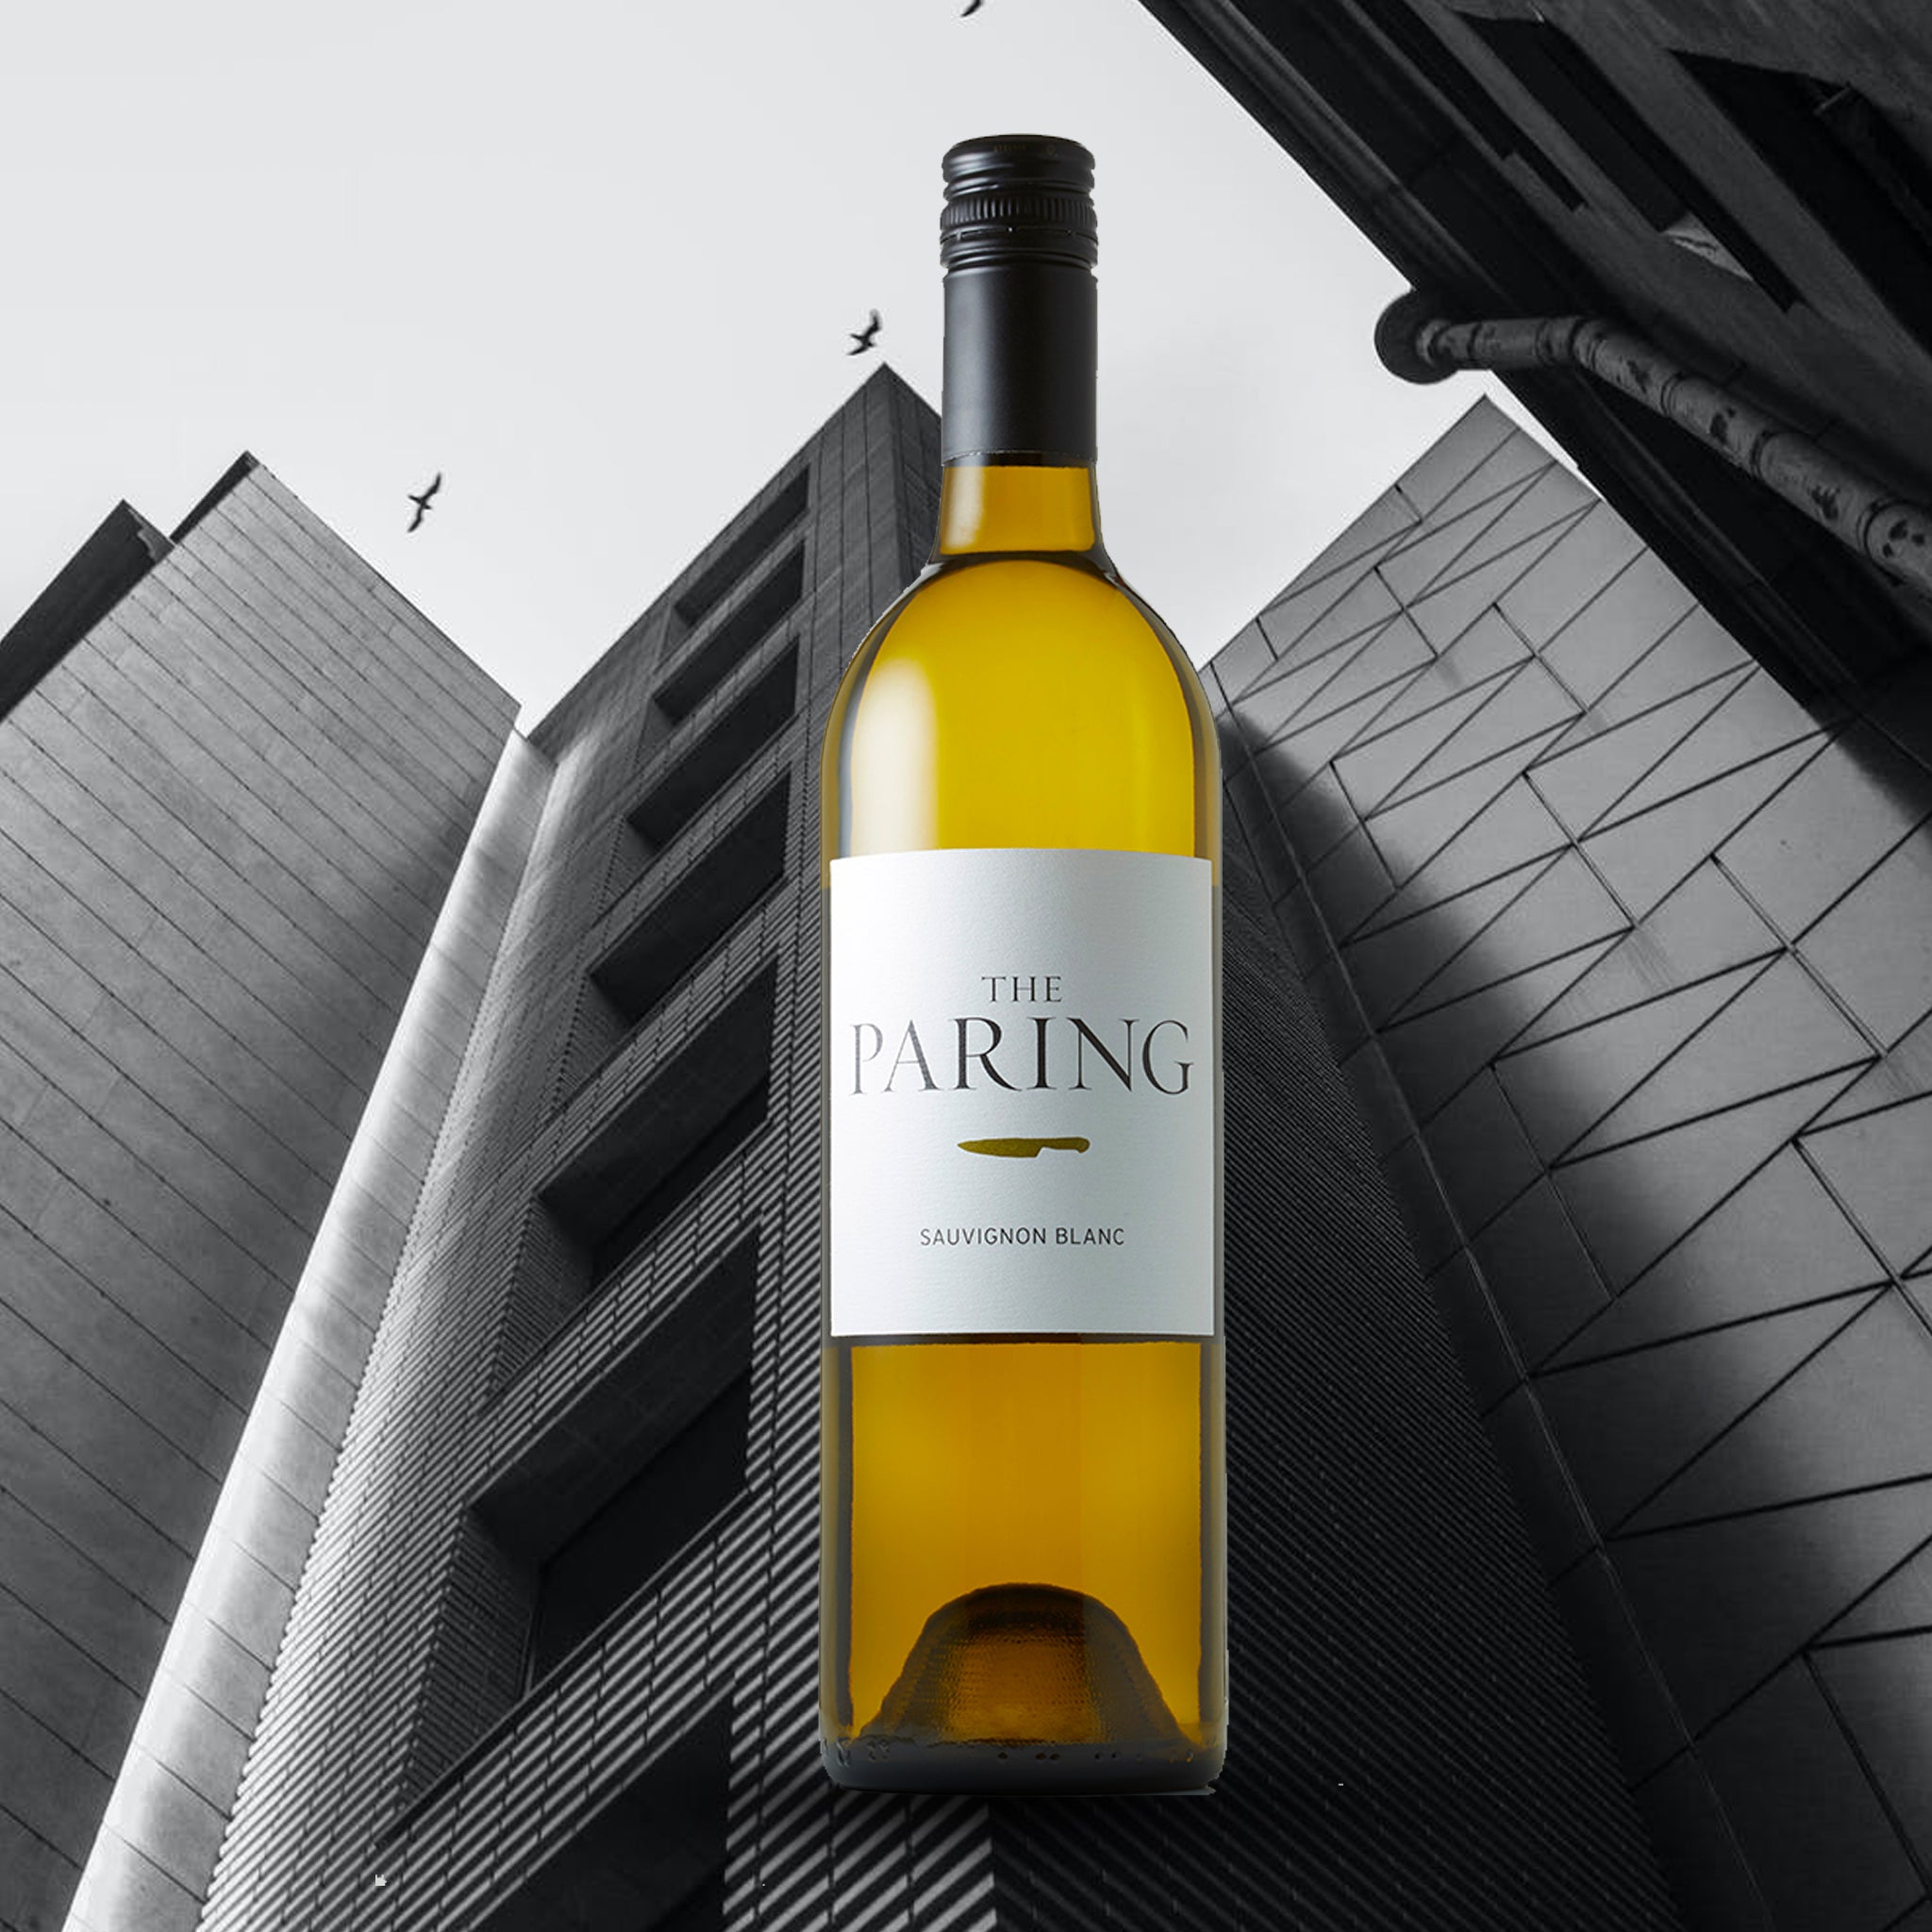 The Paring Sauvignon Blanc 2015